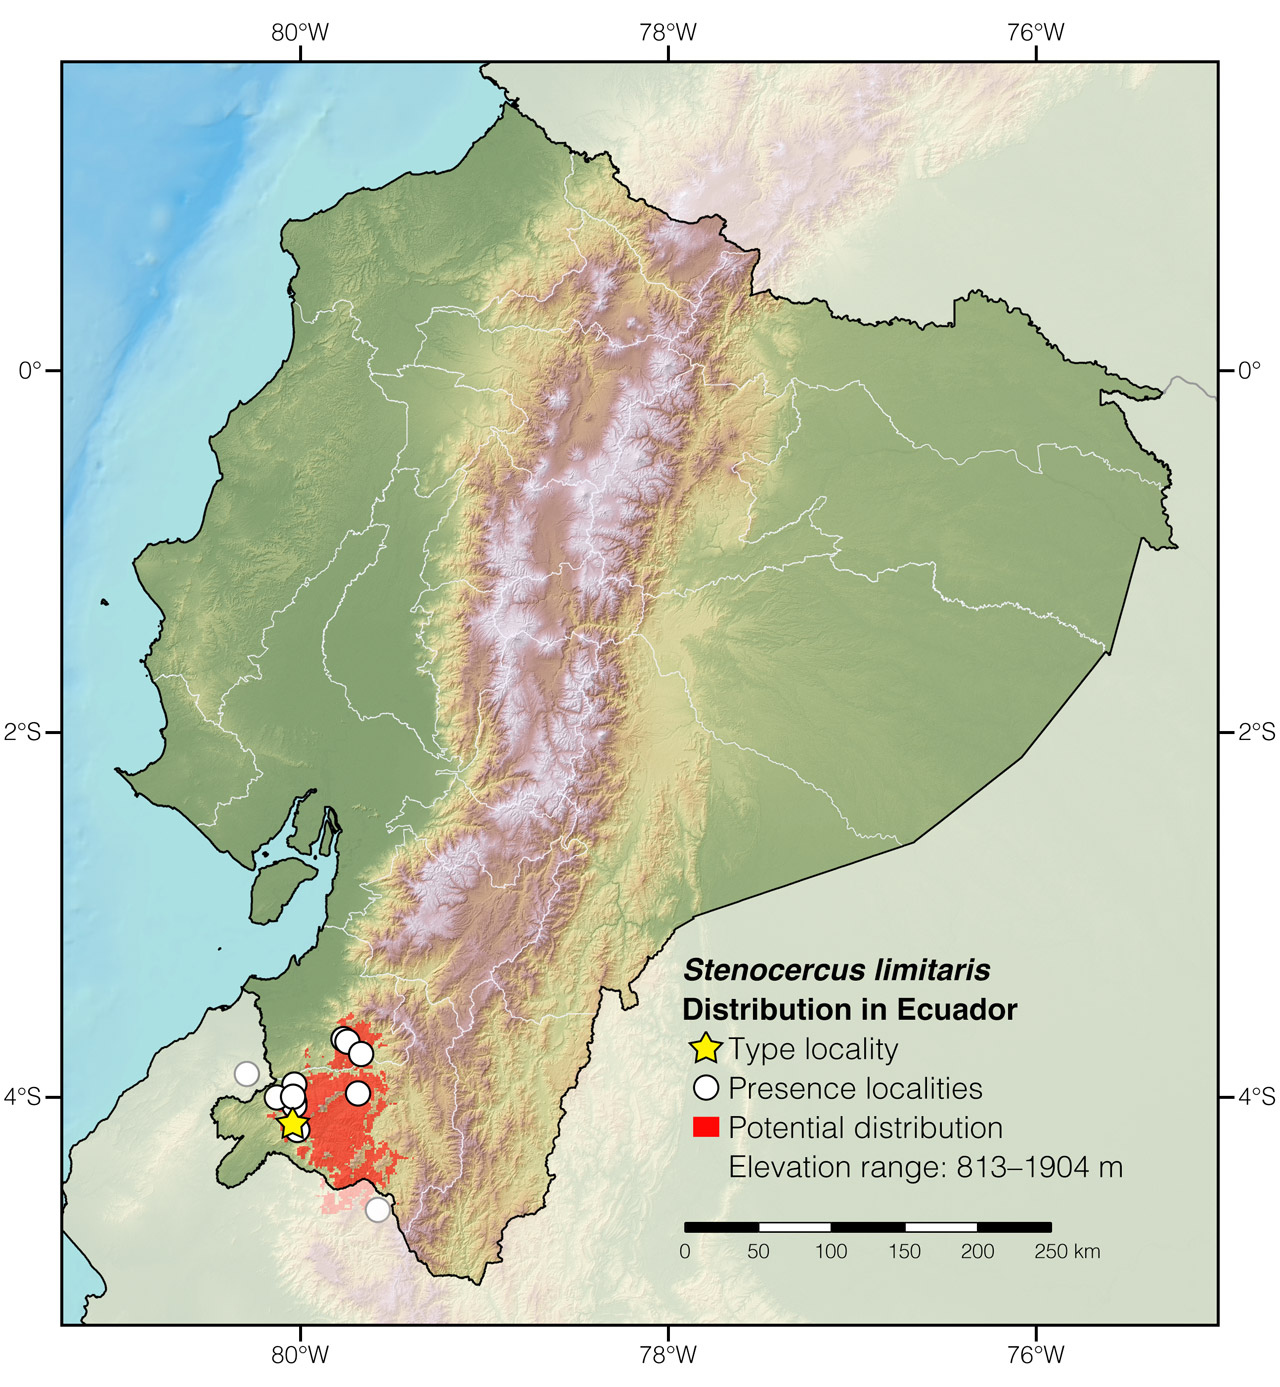 Distribution of Stenocercus limitaris in Ecuador